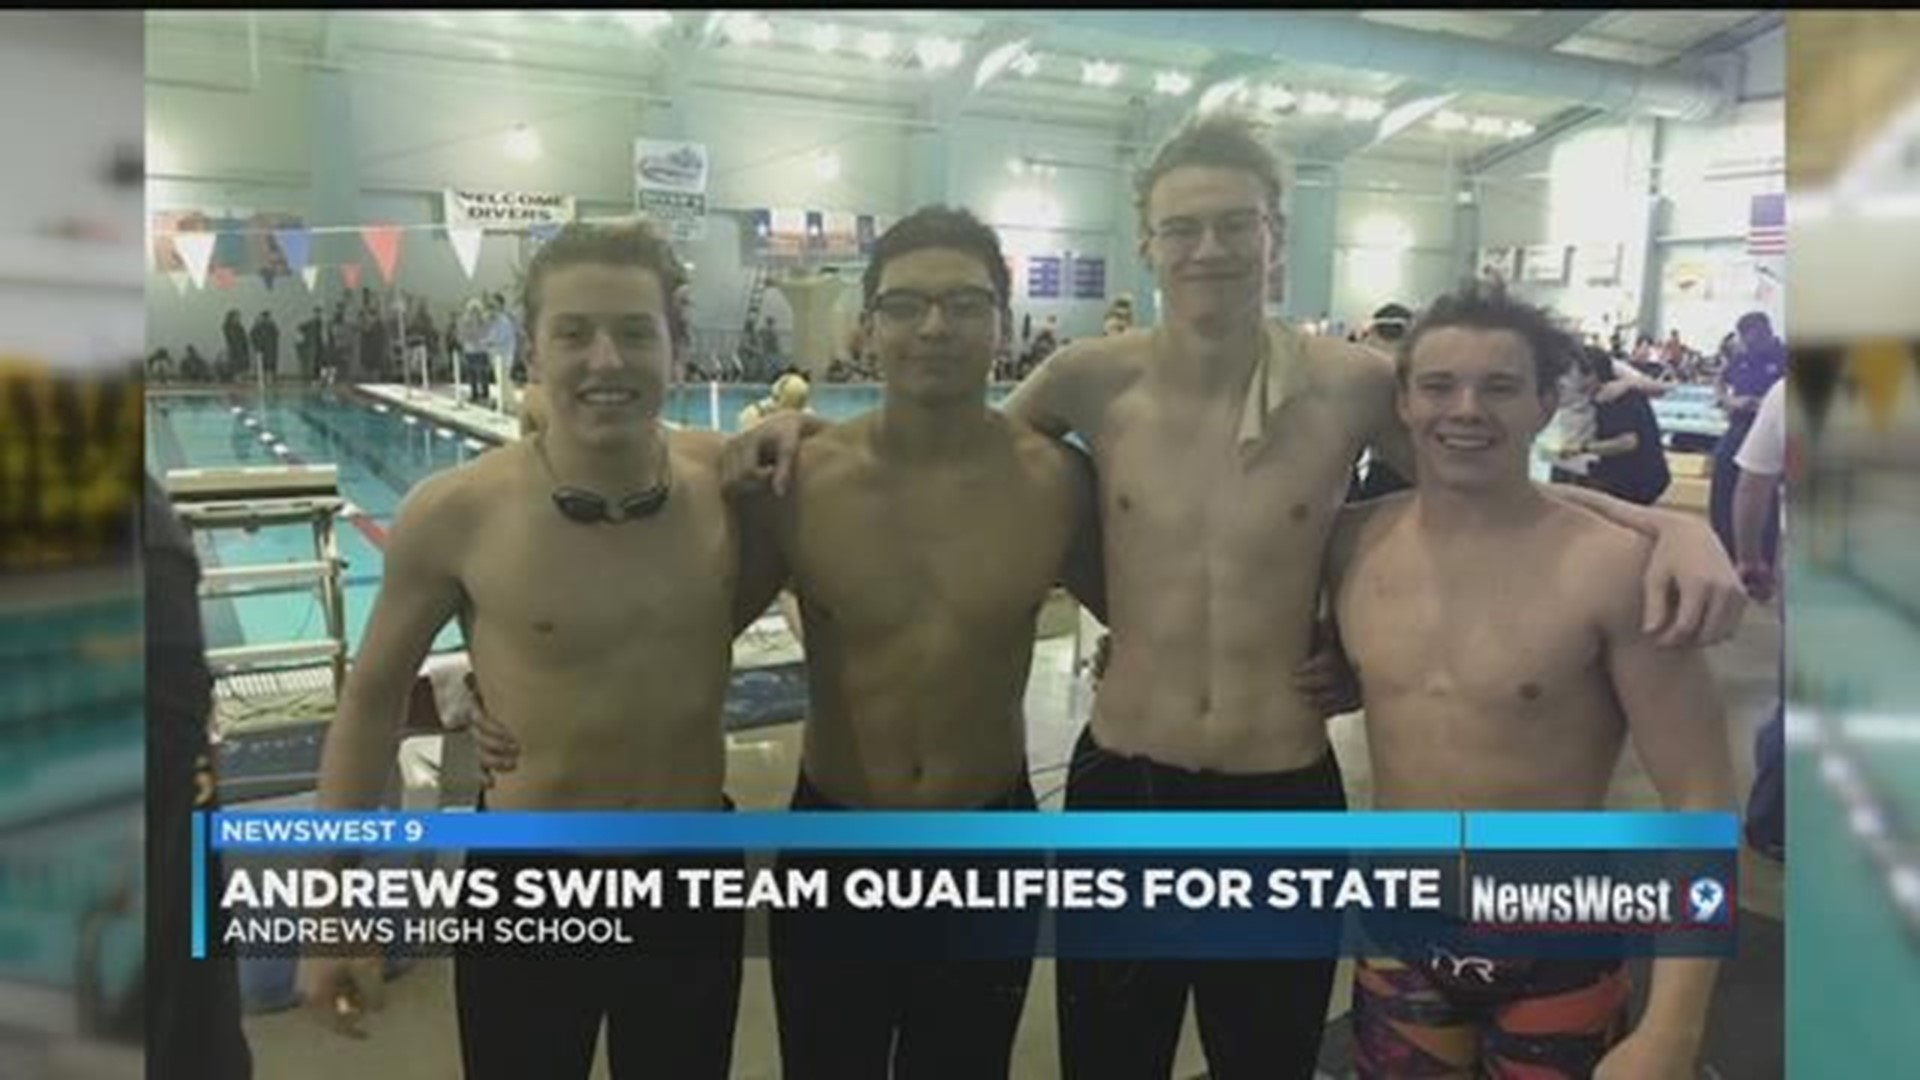 Andrews swim team qualifies for state championship meet